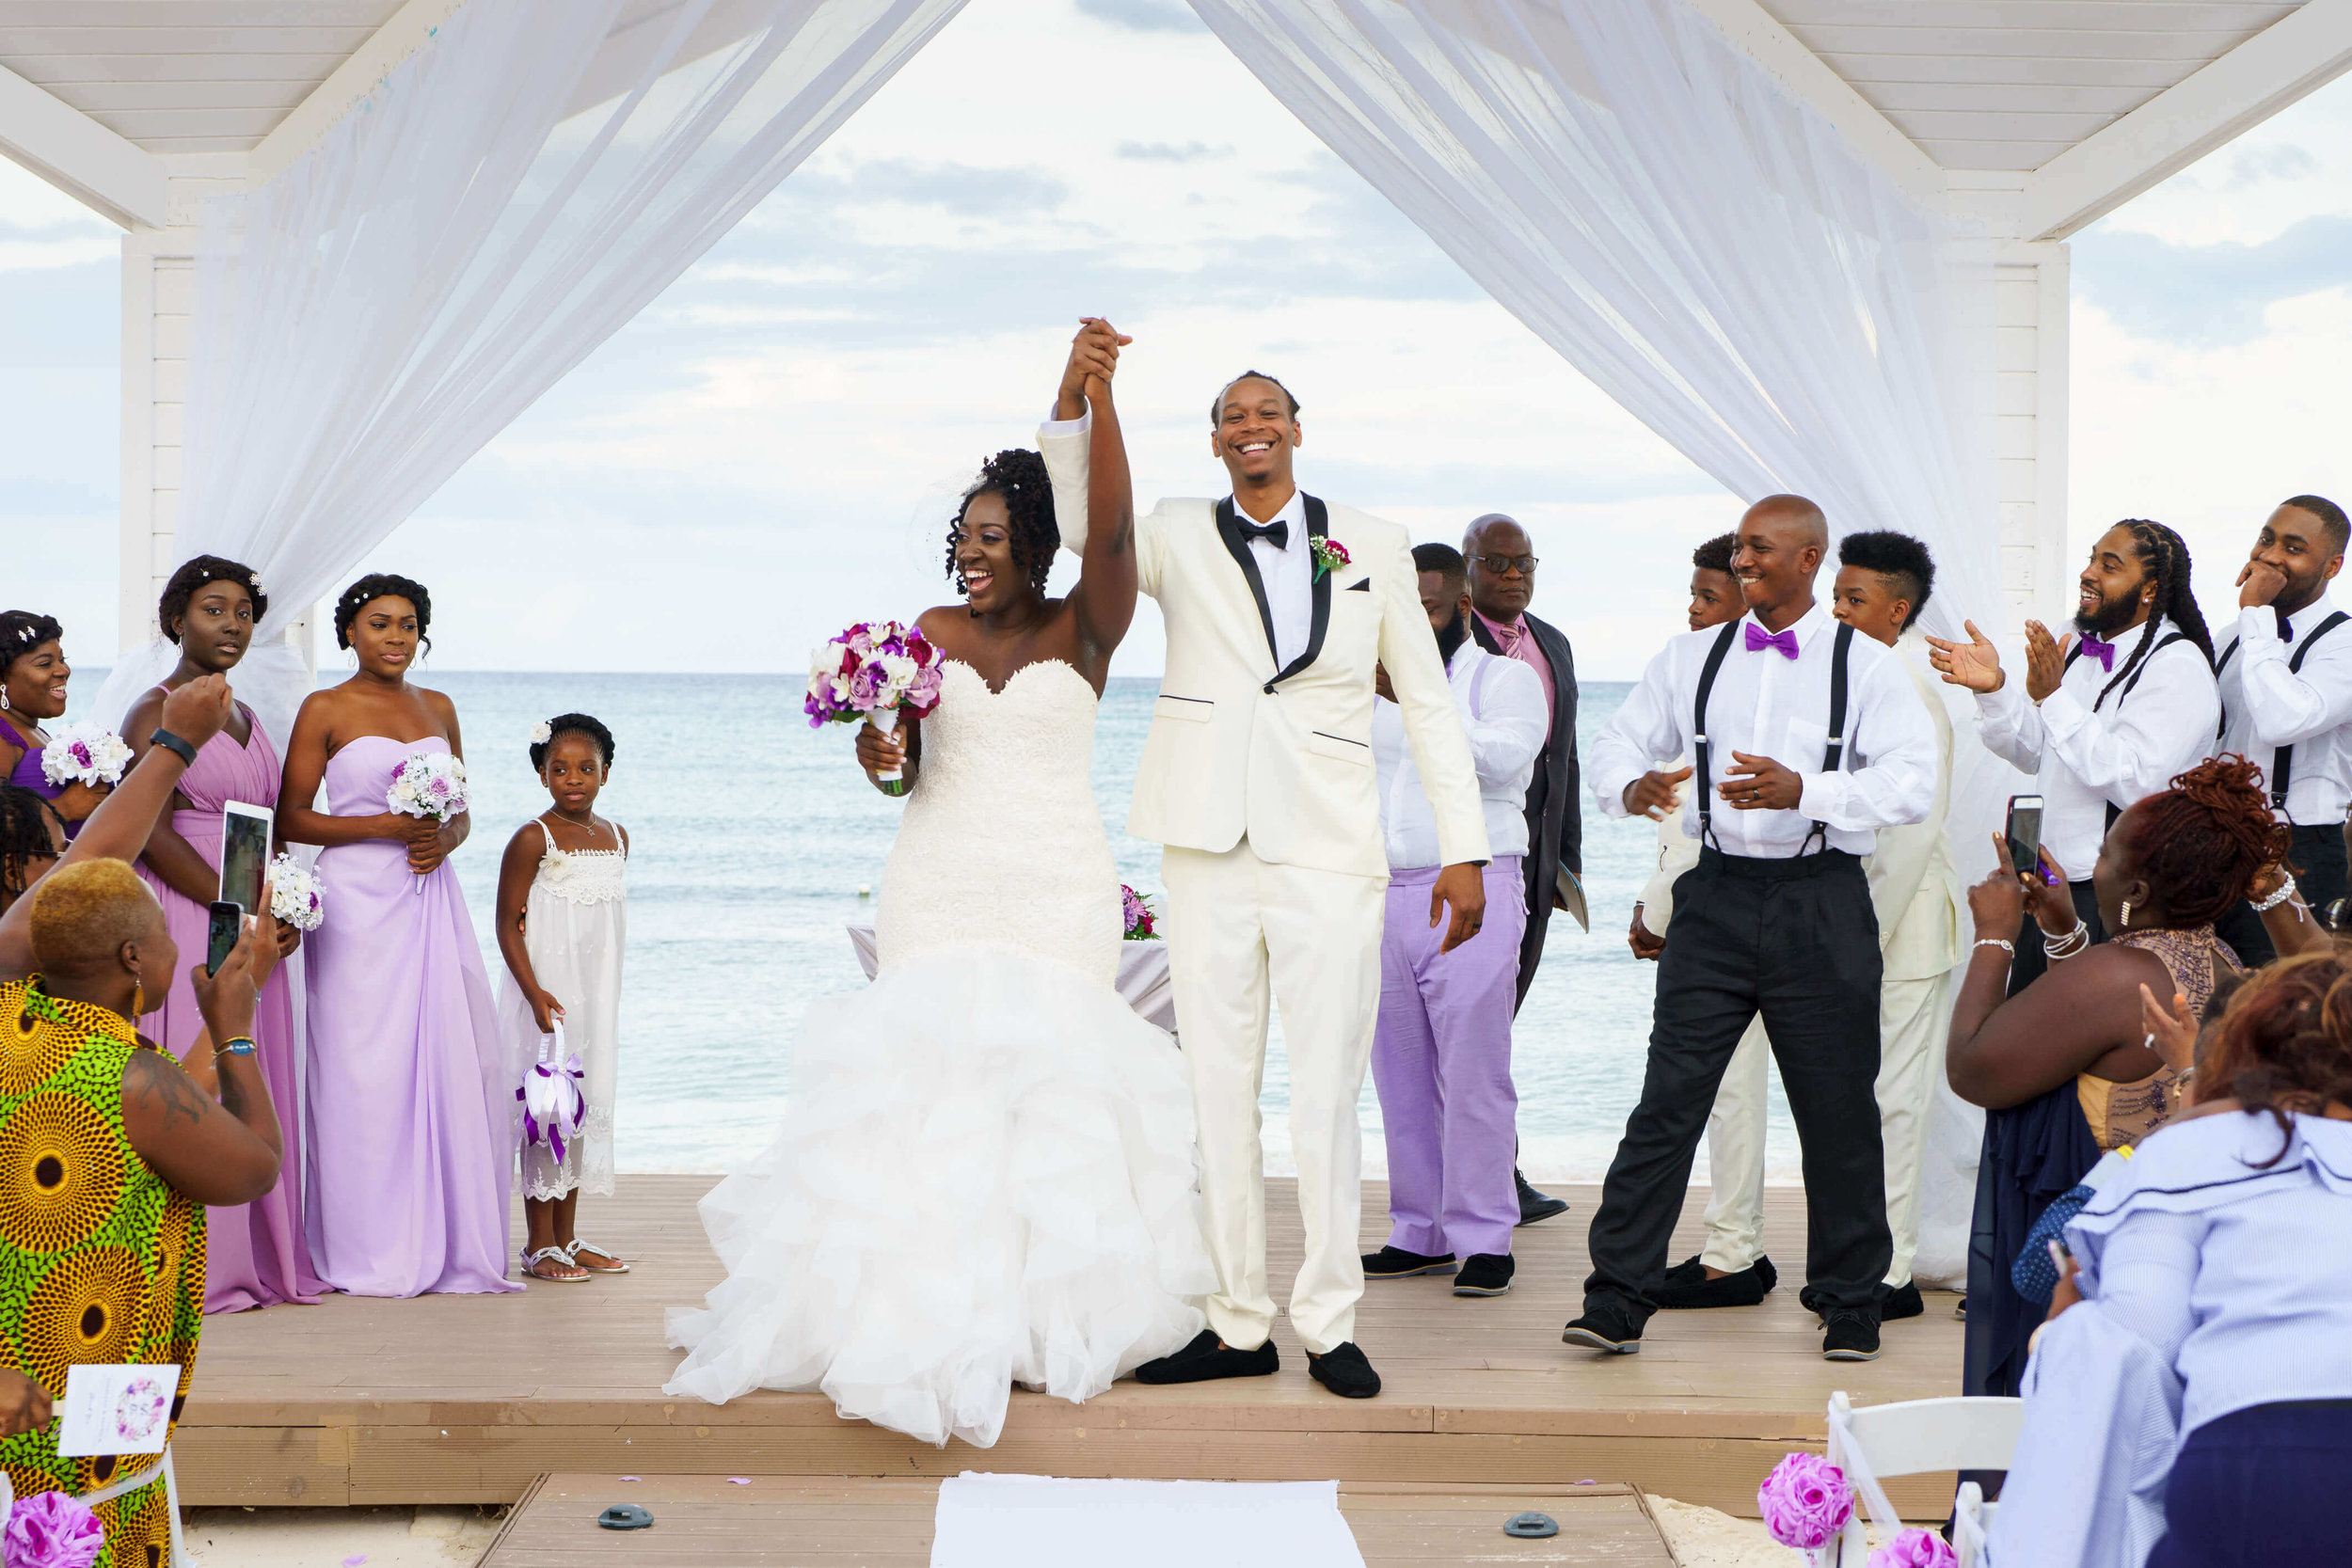 jamellah-how-to-plan-a-destination-wedding-in-montego-bay-jamaica-royalton-blue-waters-black-destination-bride-destiland-desti-guide-to-destination-weddings-beach-ceremony.jpg